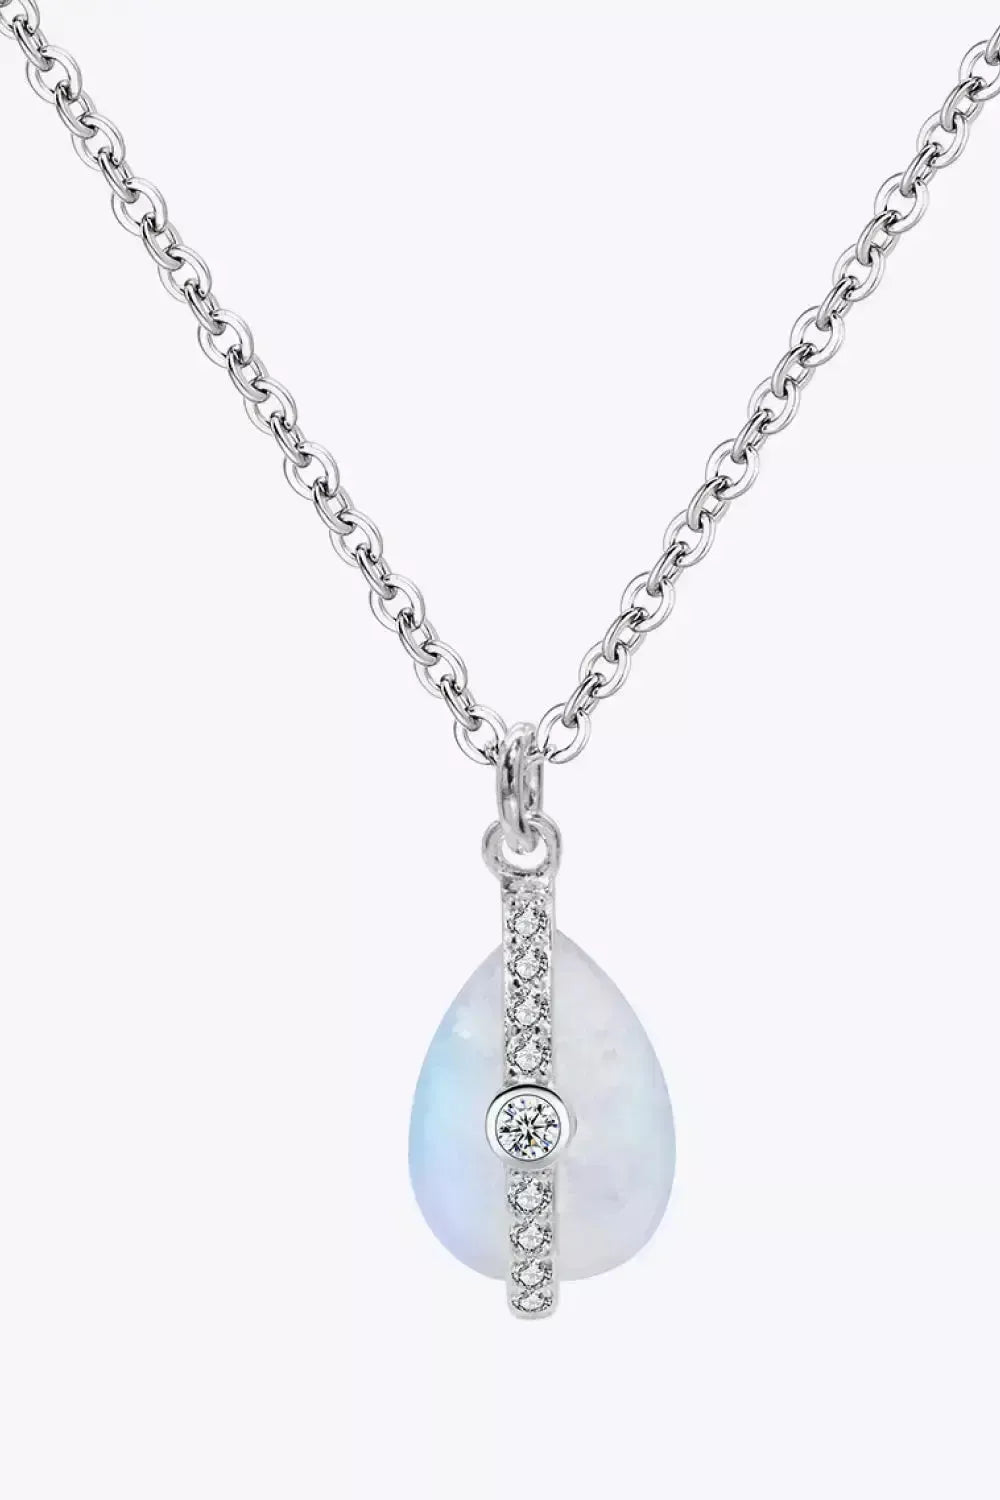 Natural Moonstone and Zircon Pendant Necklace - Godiva Oya Bey